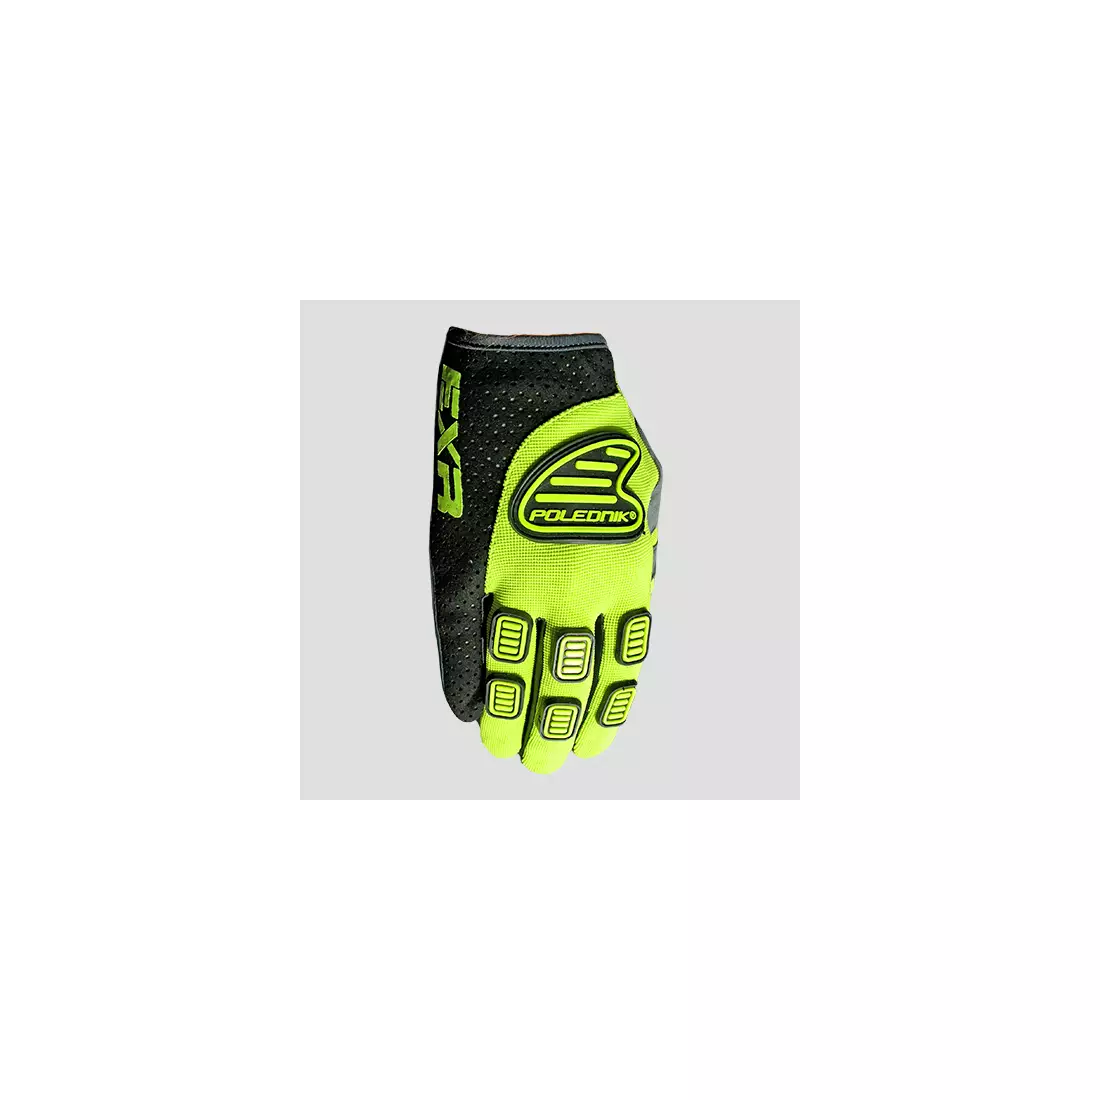 Cyklistické rukavice POLEDNIK EXR, barva: fluor